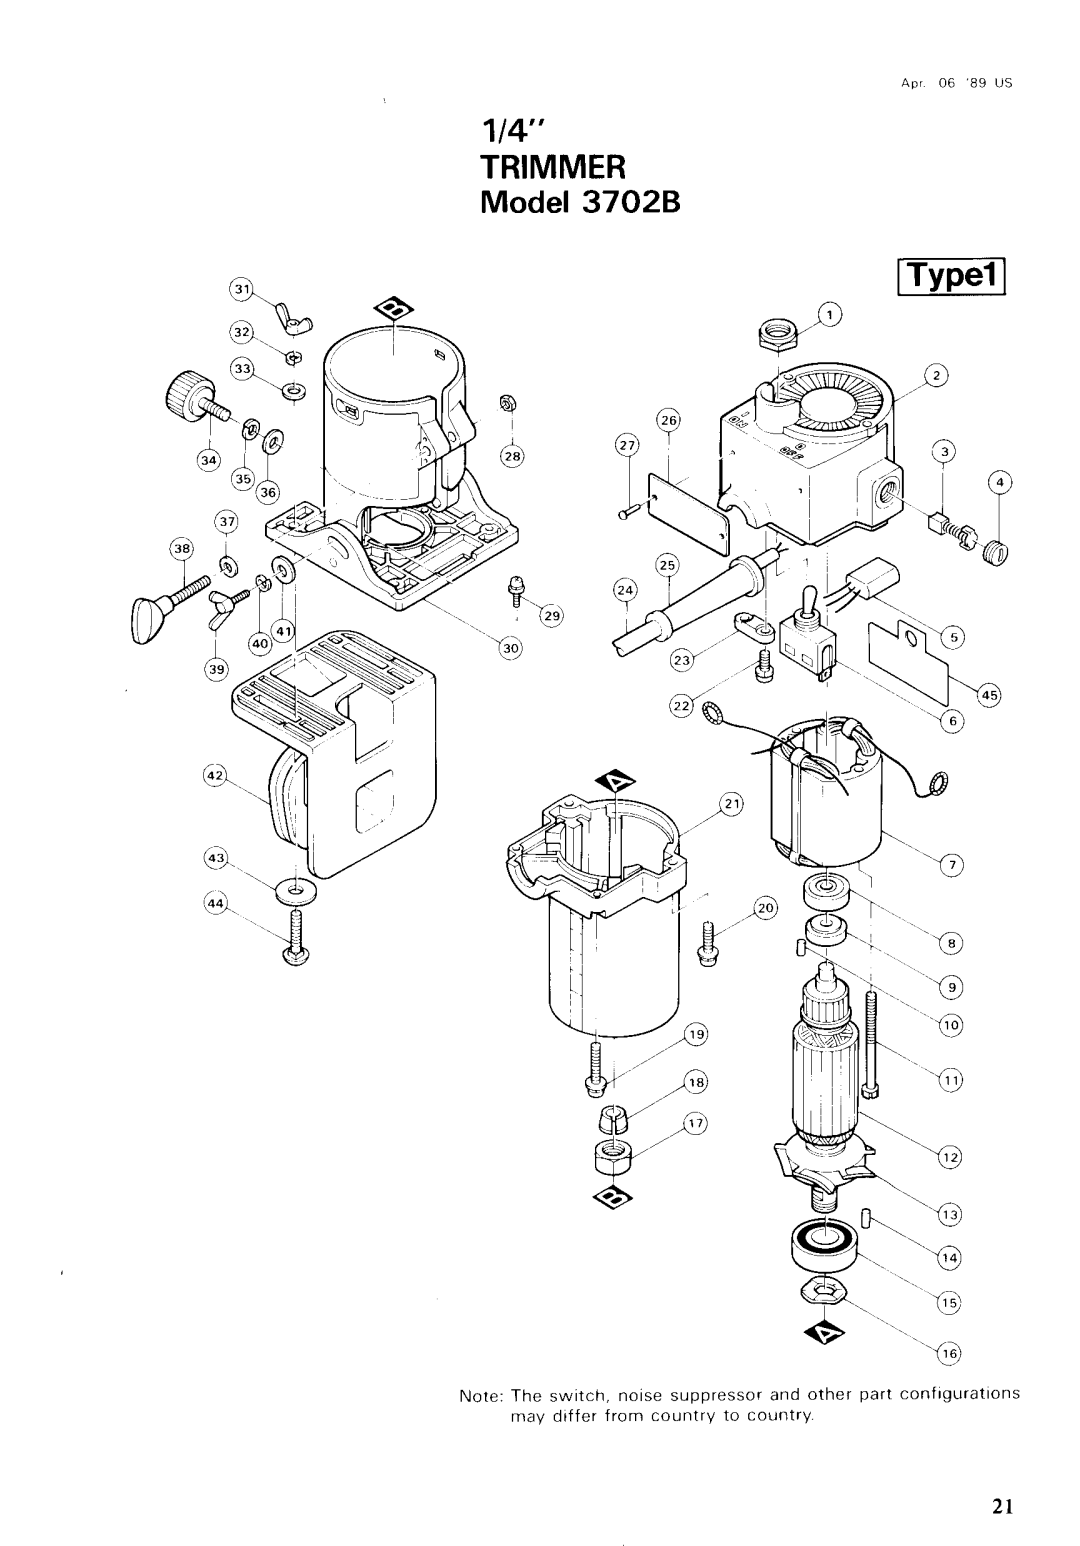 Makita instruction manual 114”, Trimmer, Model 3702B, Apr 06 ‘89 US 